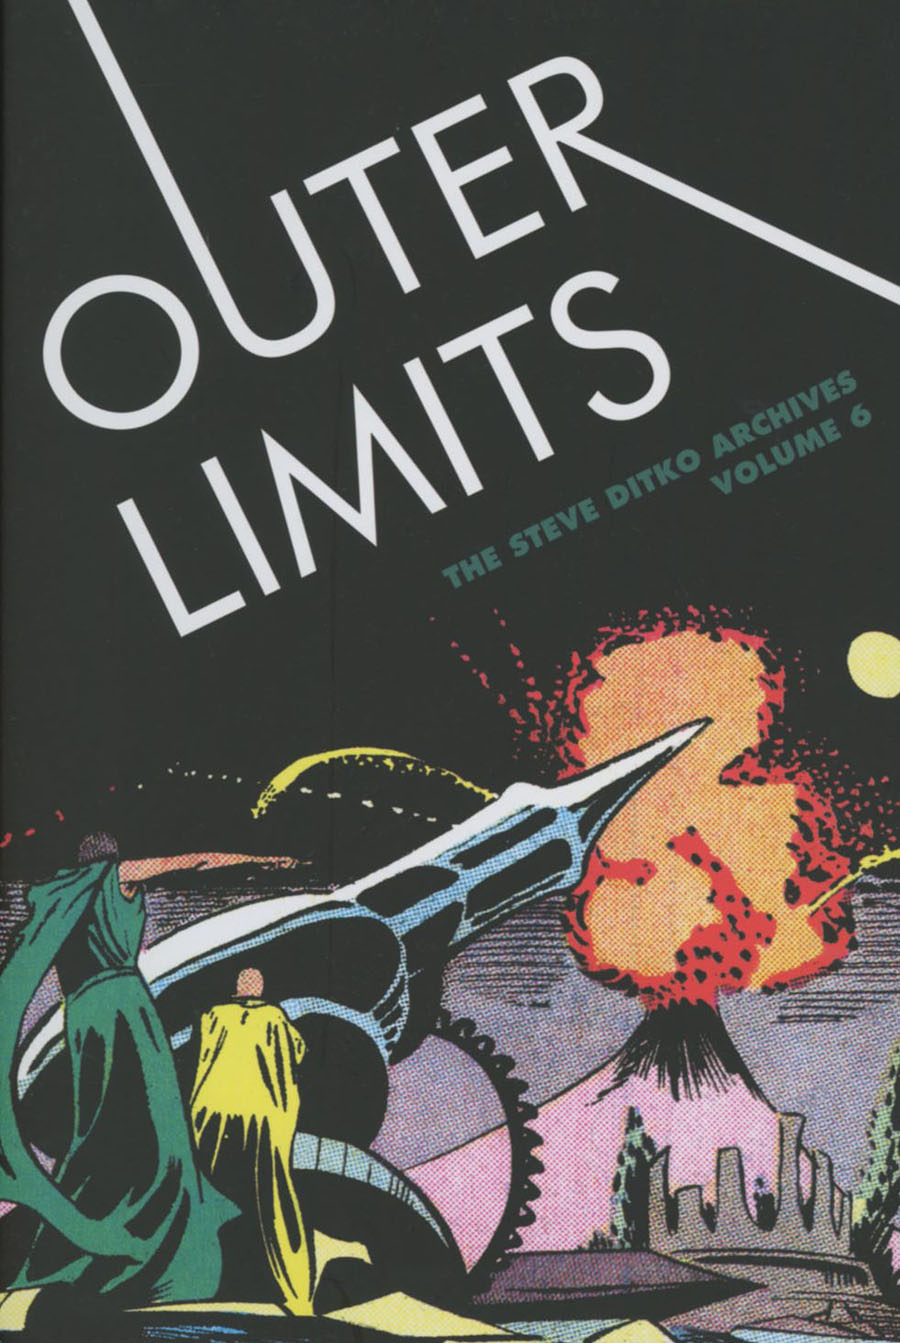 Outer Limits Steve Ditko Archives Vol 6 HC